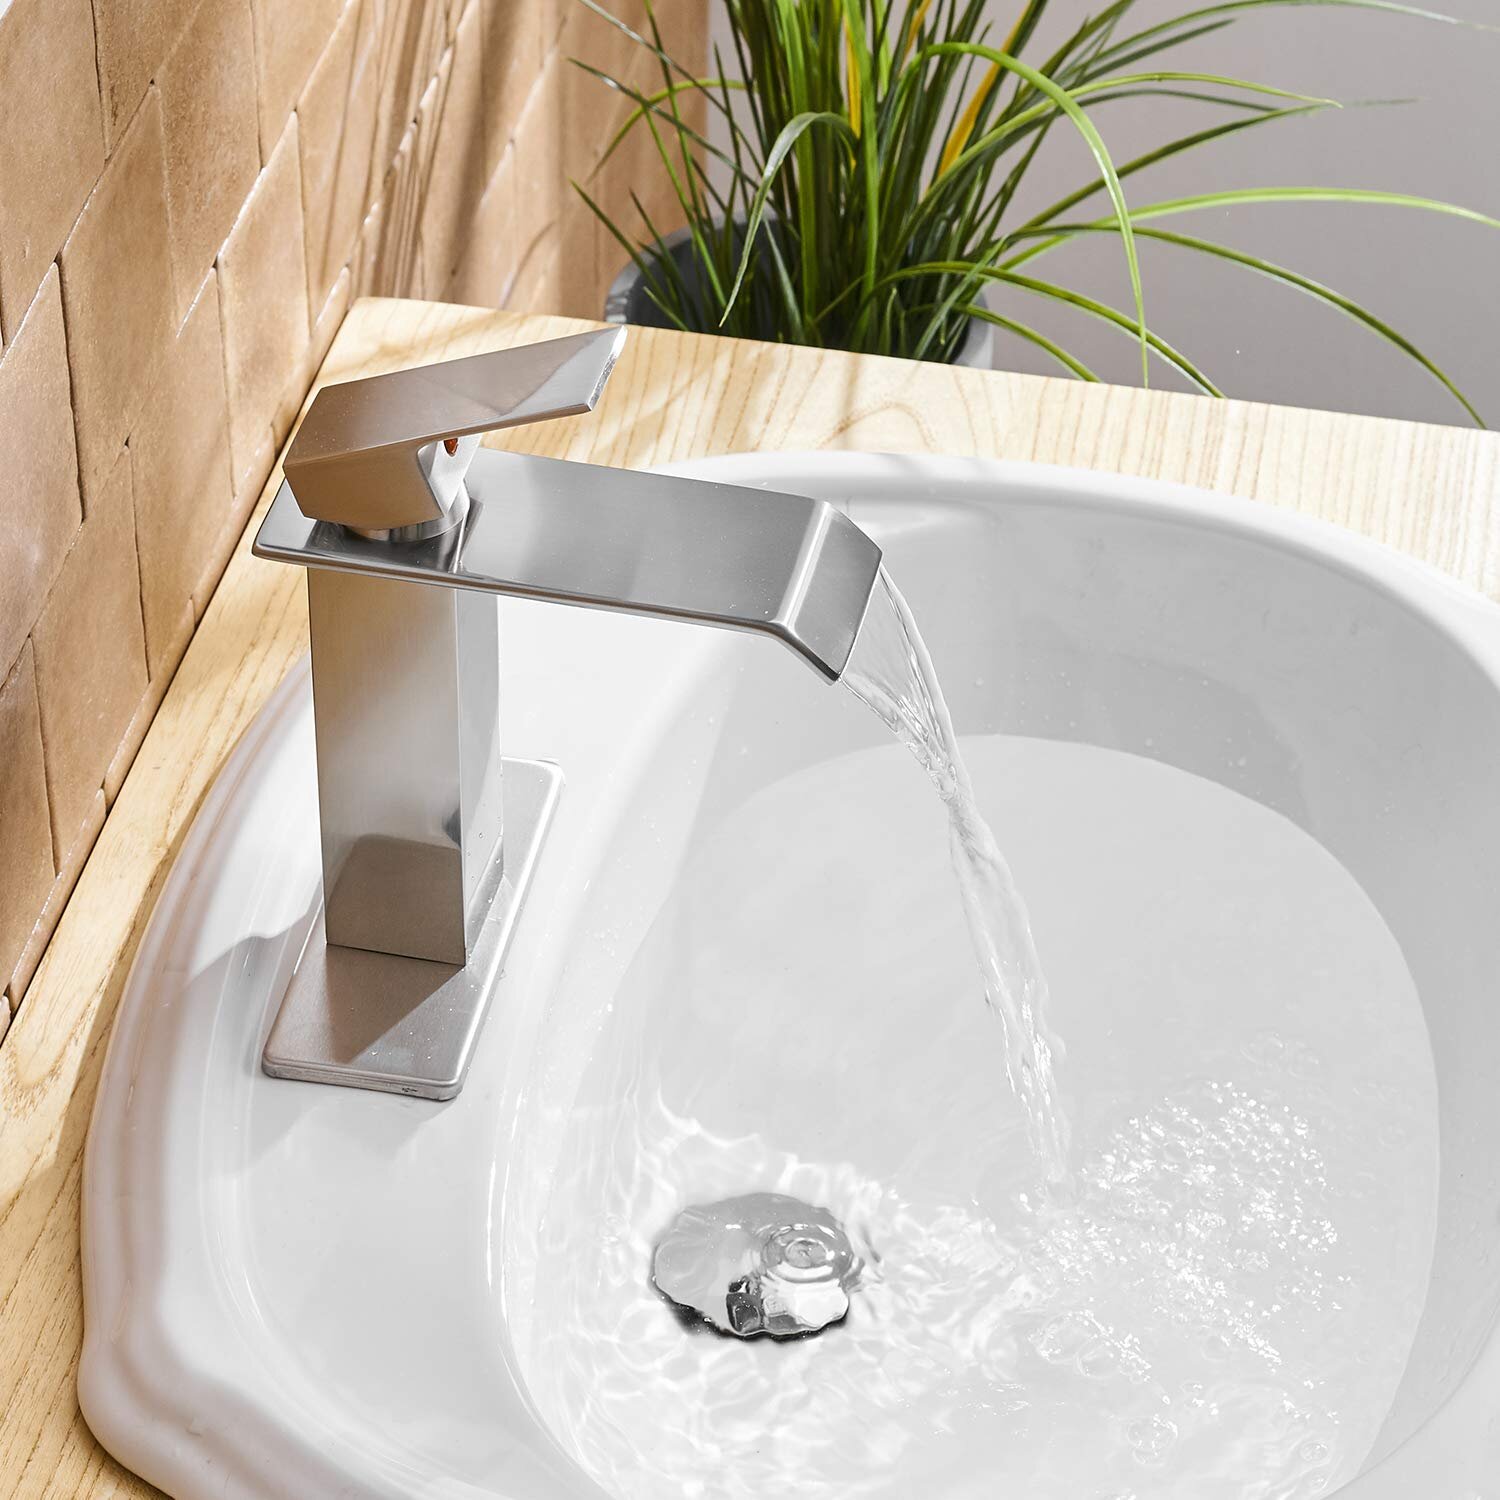 Bathroom Tall Glass Waterfall Basin Faucet Mixer Taps Chrome Finish Single Hole 